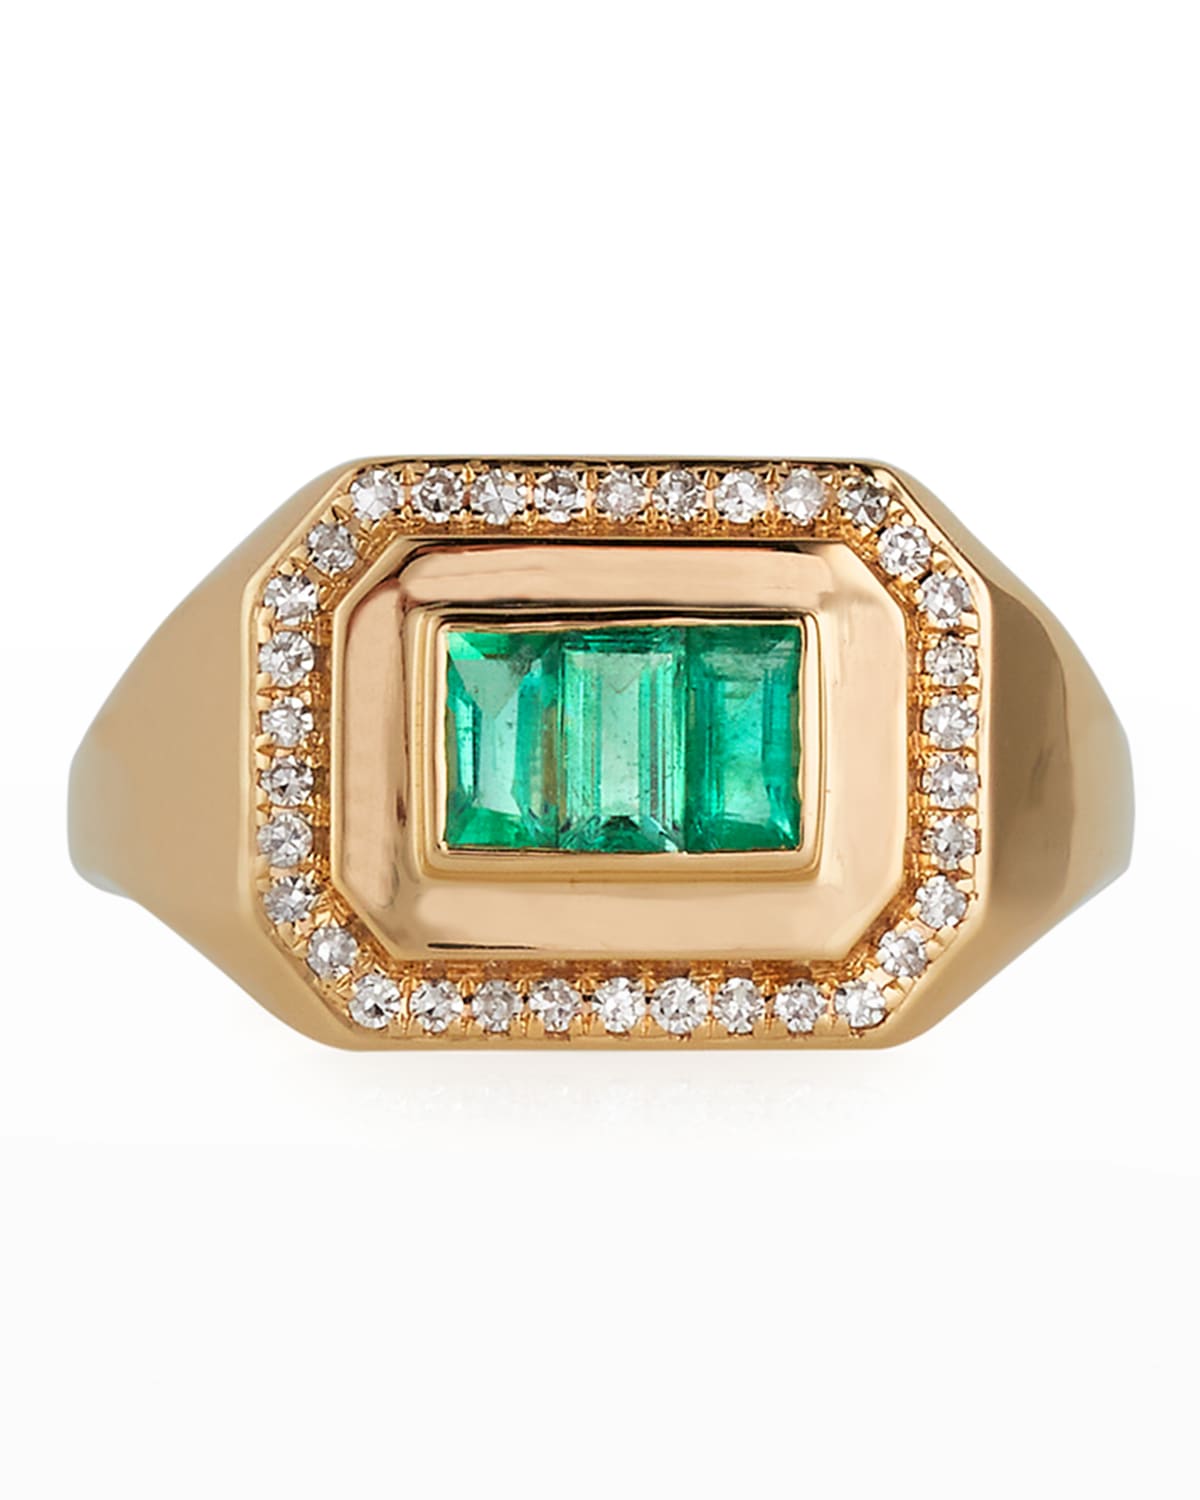 Kastel Jewelry Champion Emerald Ring, Size 4